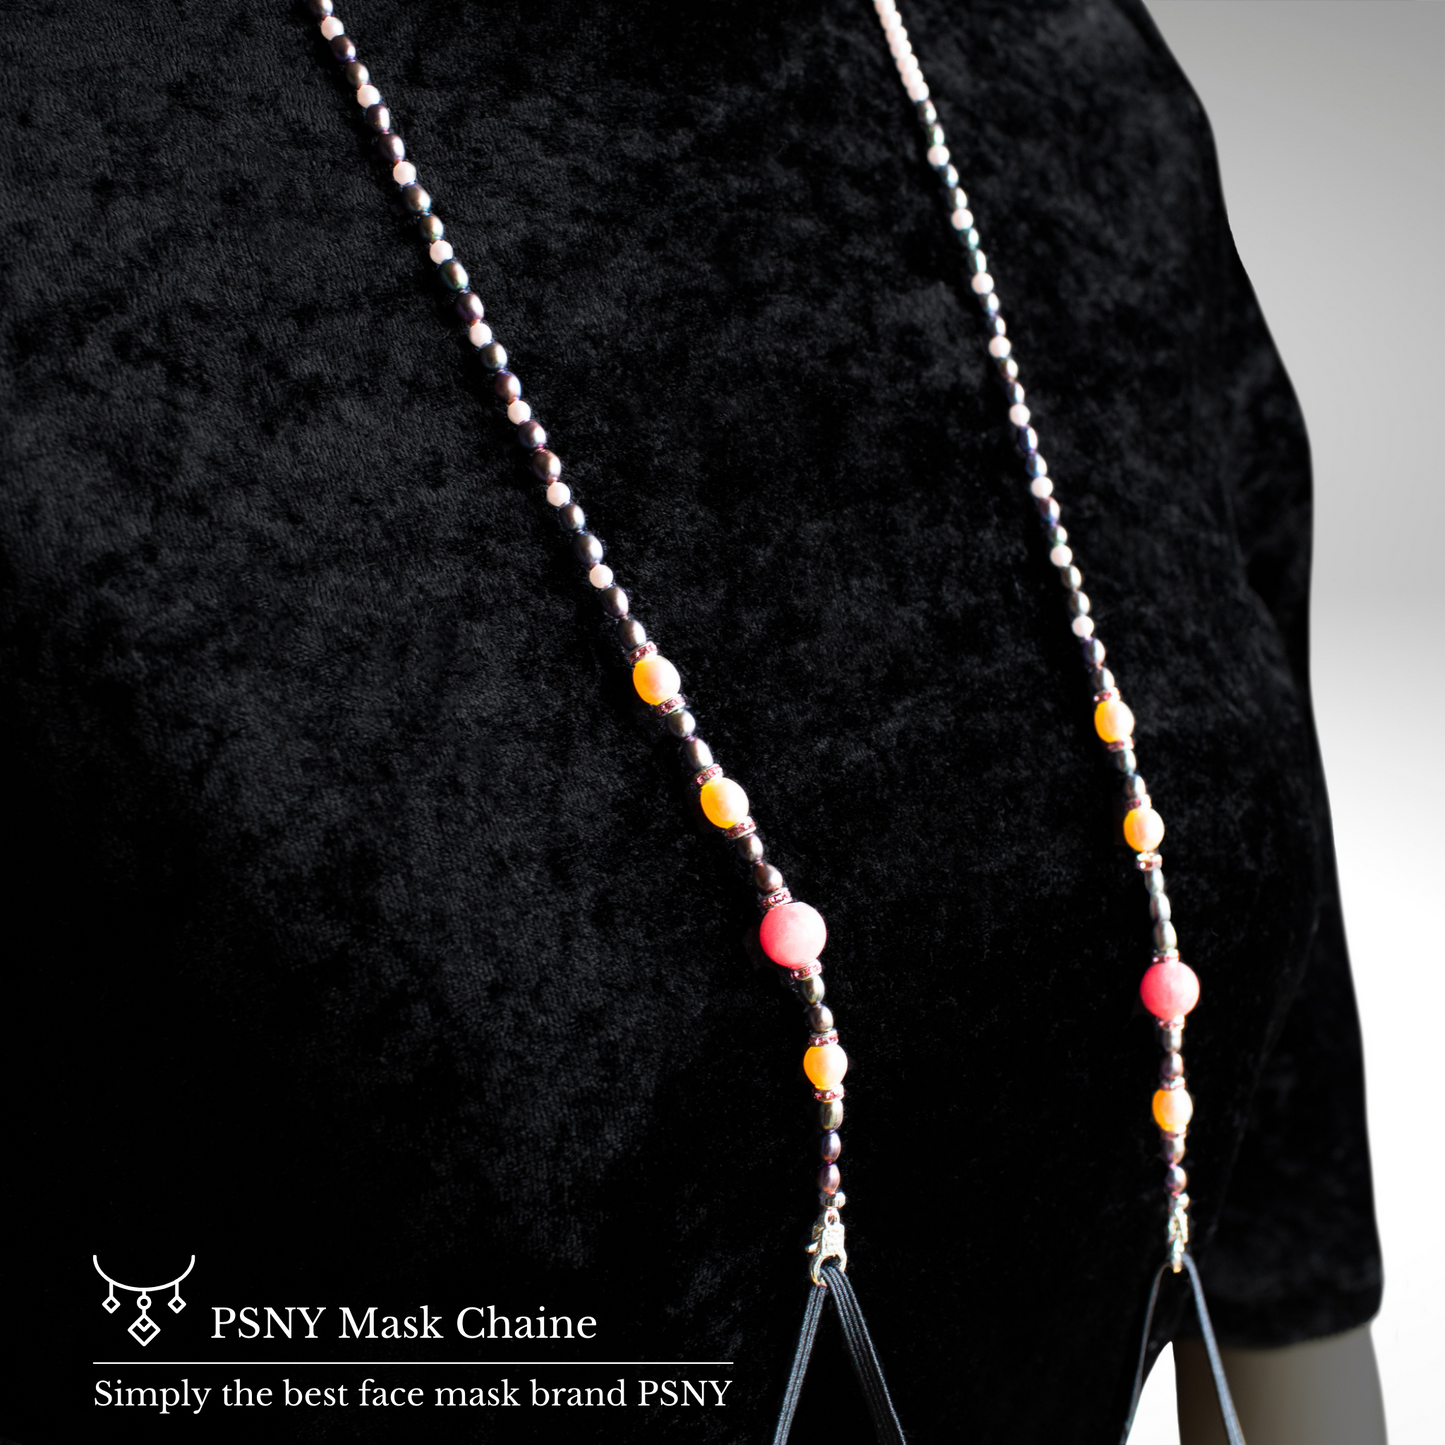 PSNY Mask Strap 2way Glasses Chain Natural Stone Inca Rose Larimar MC02